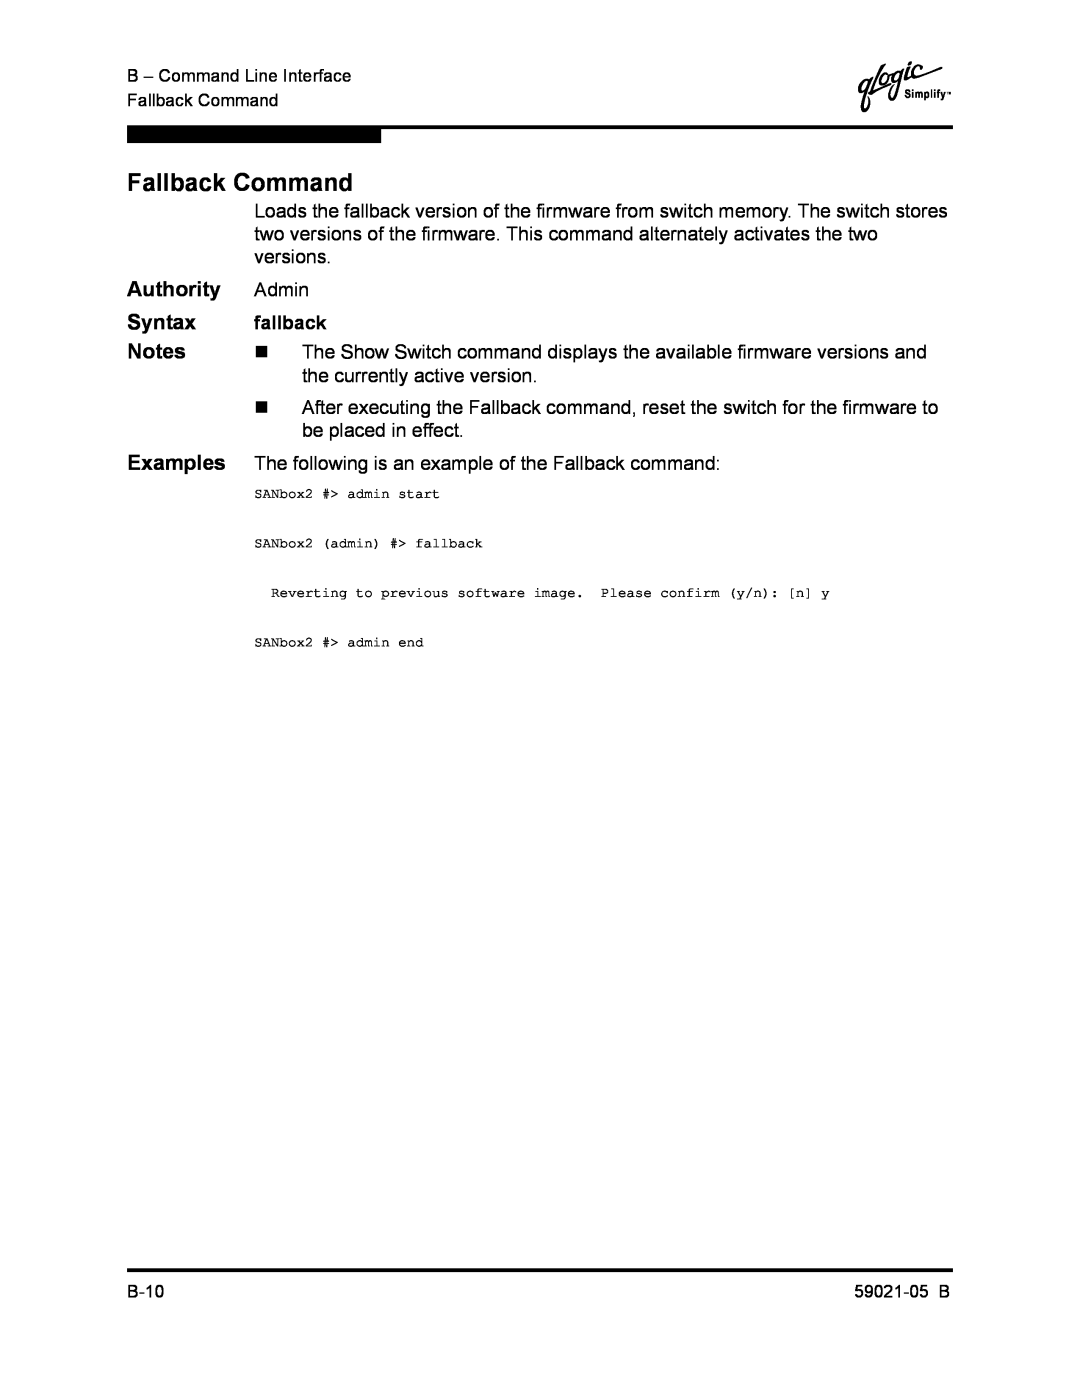 Q-Logic 59021-05 B manual Fallback Command, Authority, Syntax, Examples, fallback 